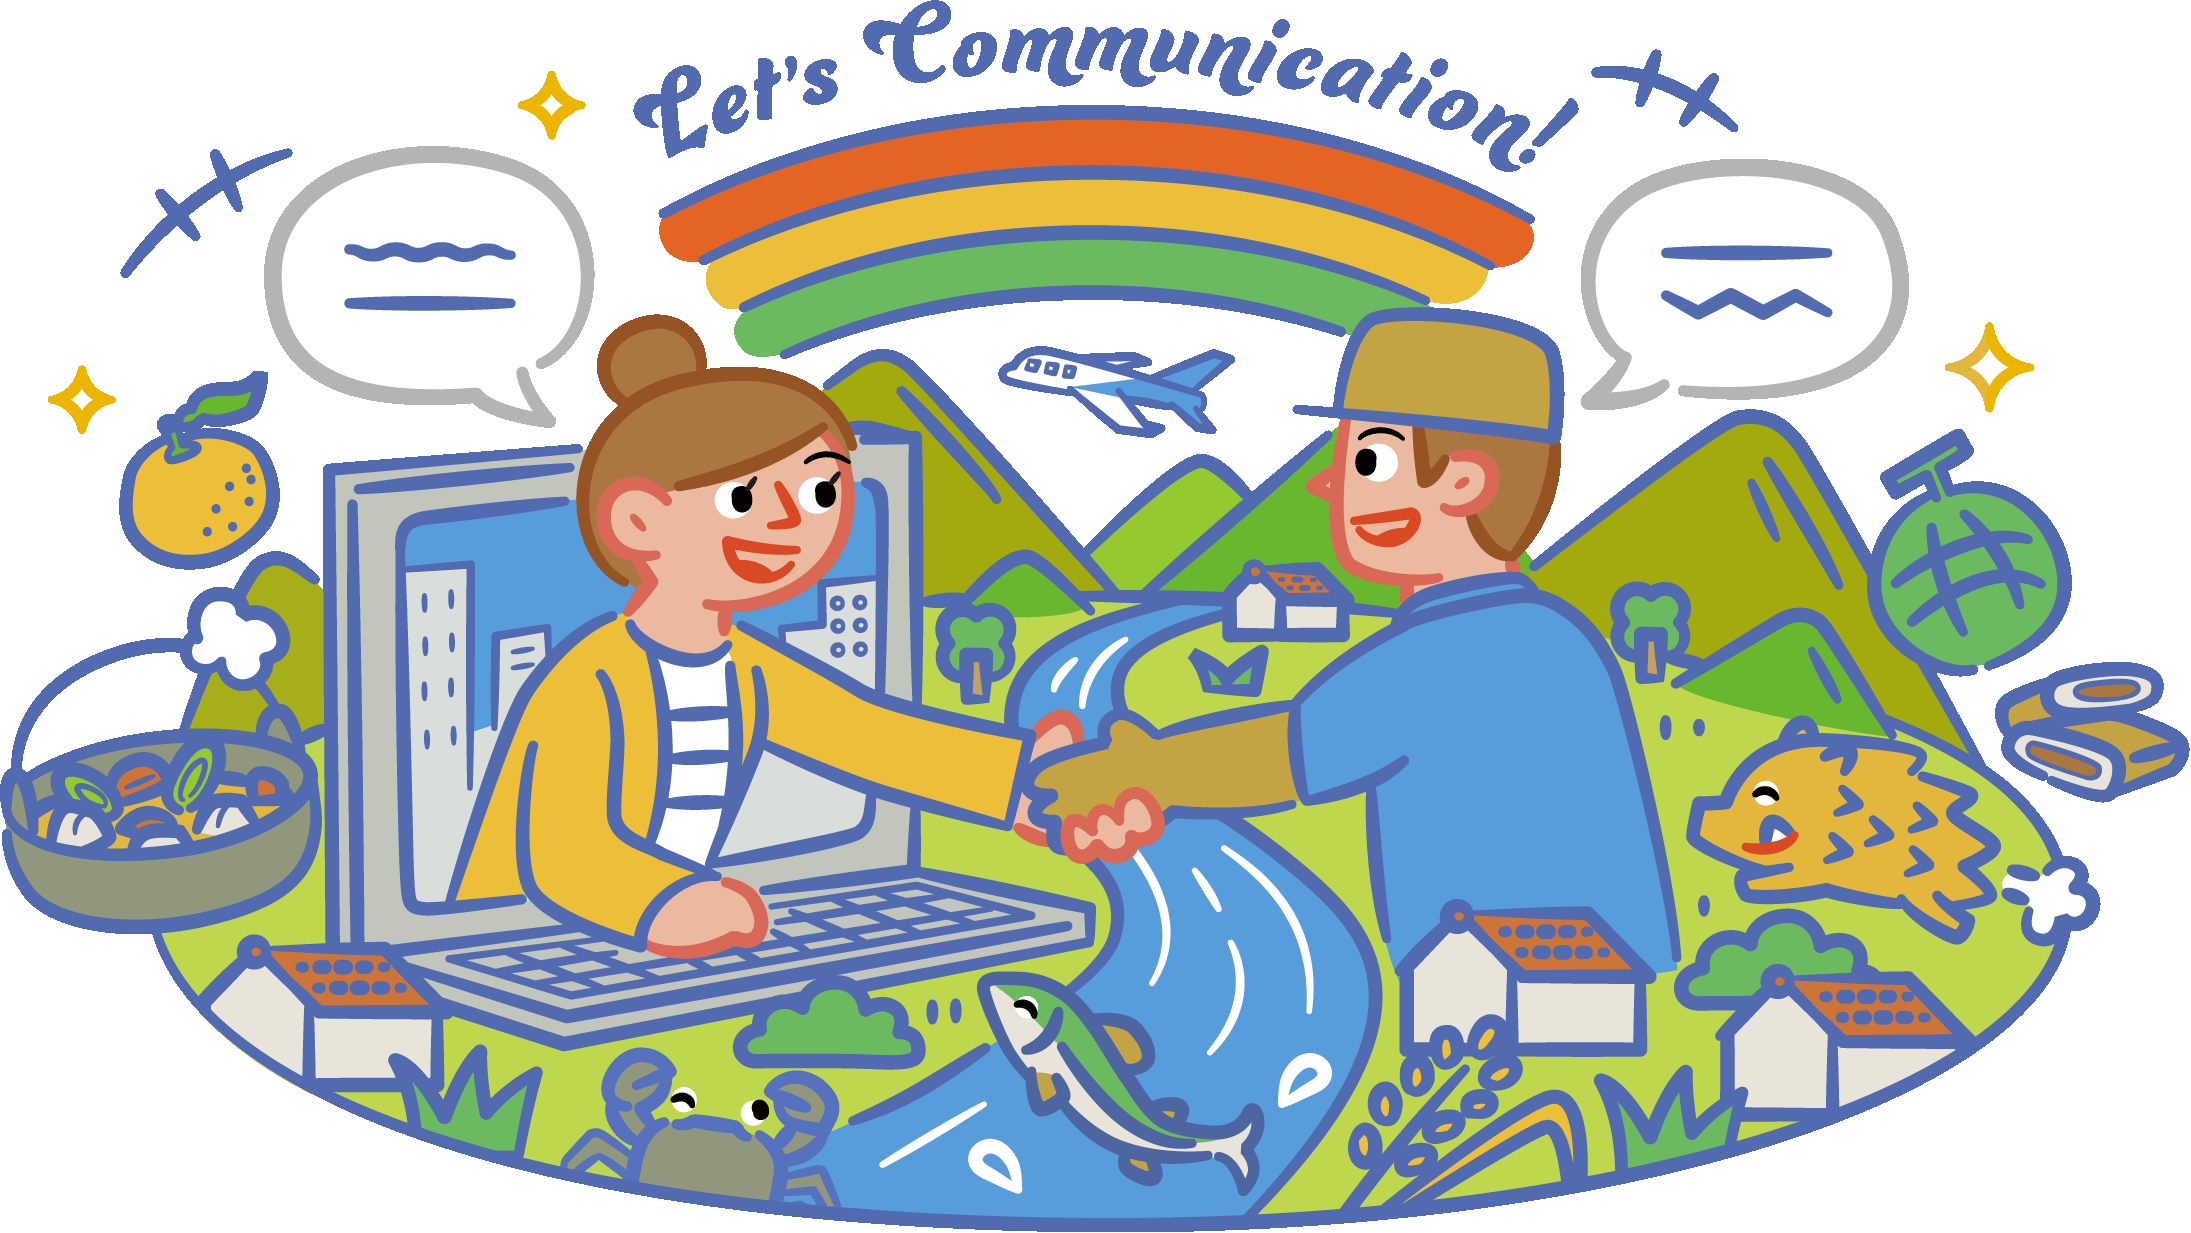 Let's Communication!